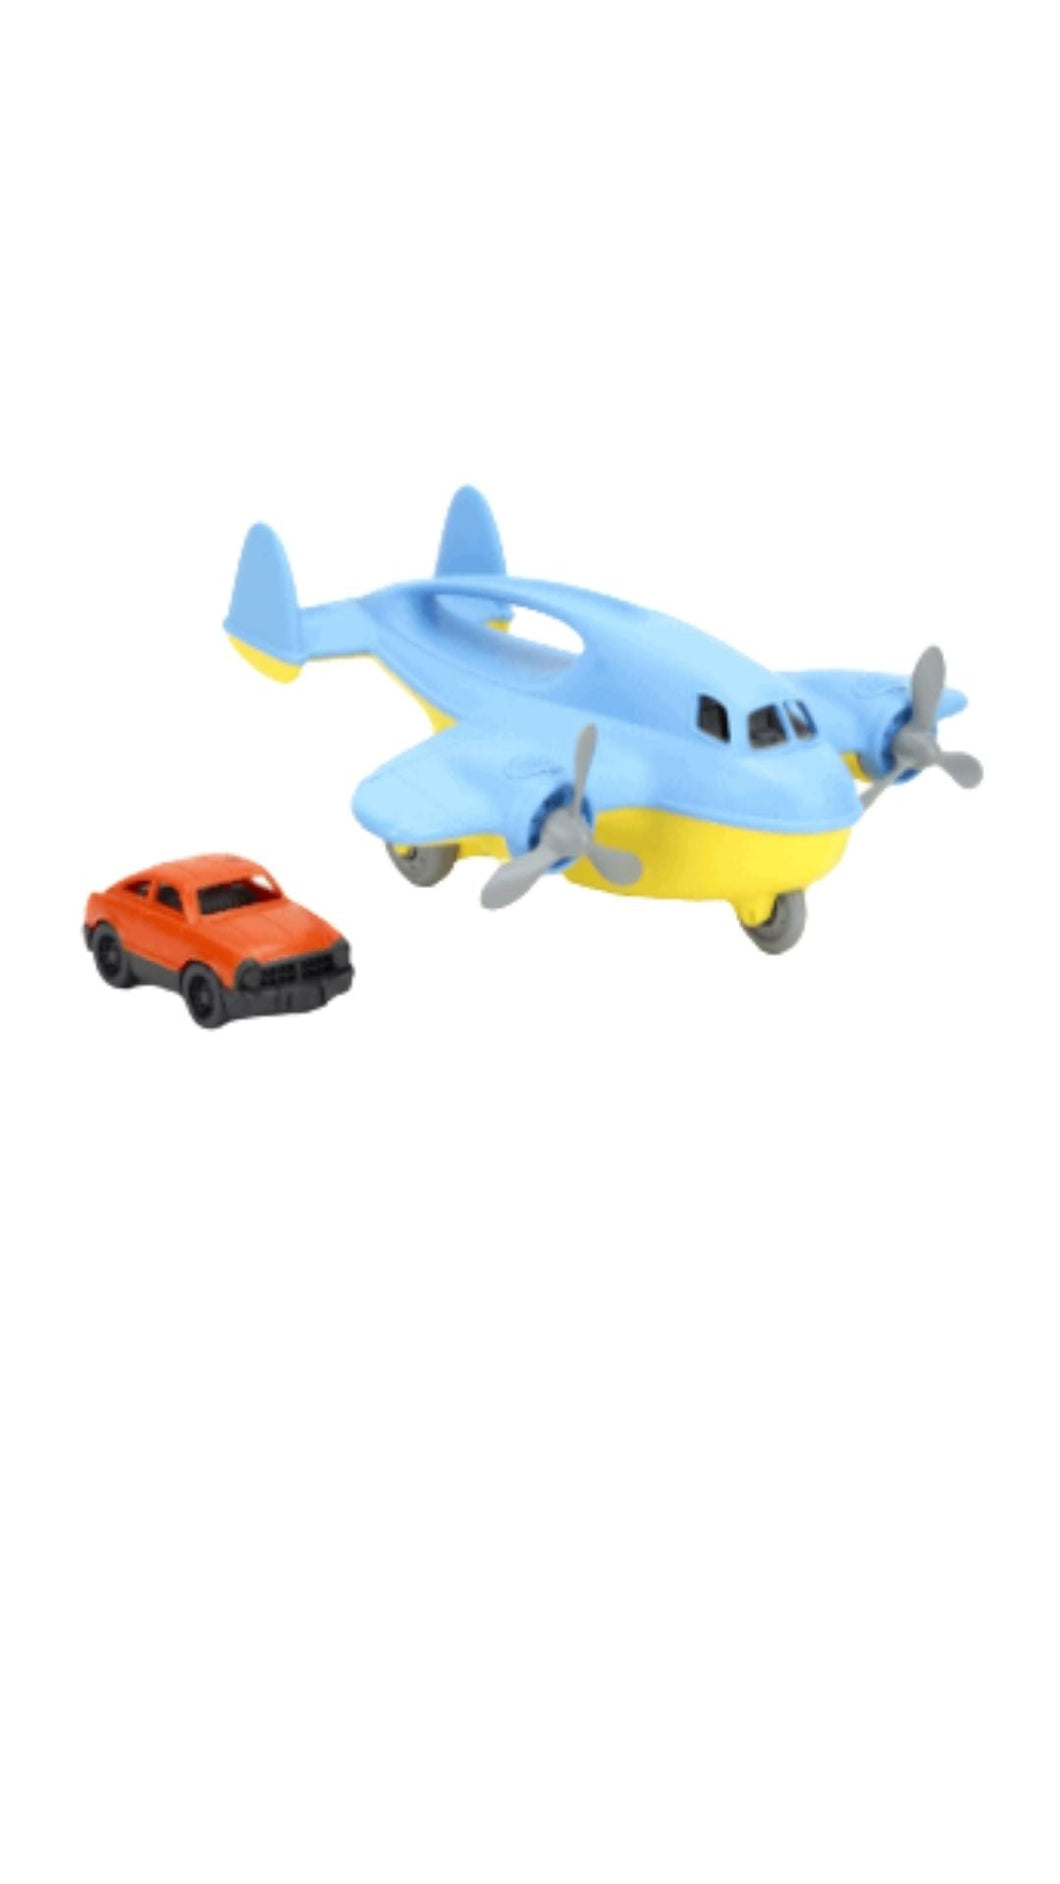 Cargo Plane and Mini Car